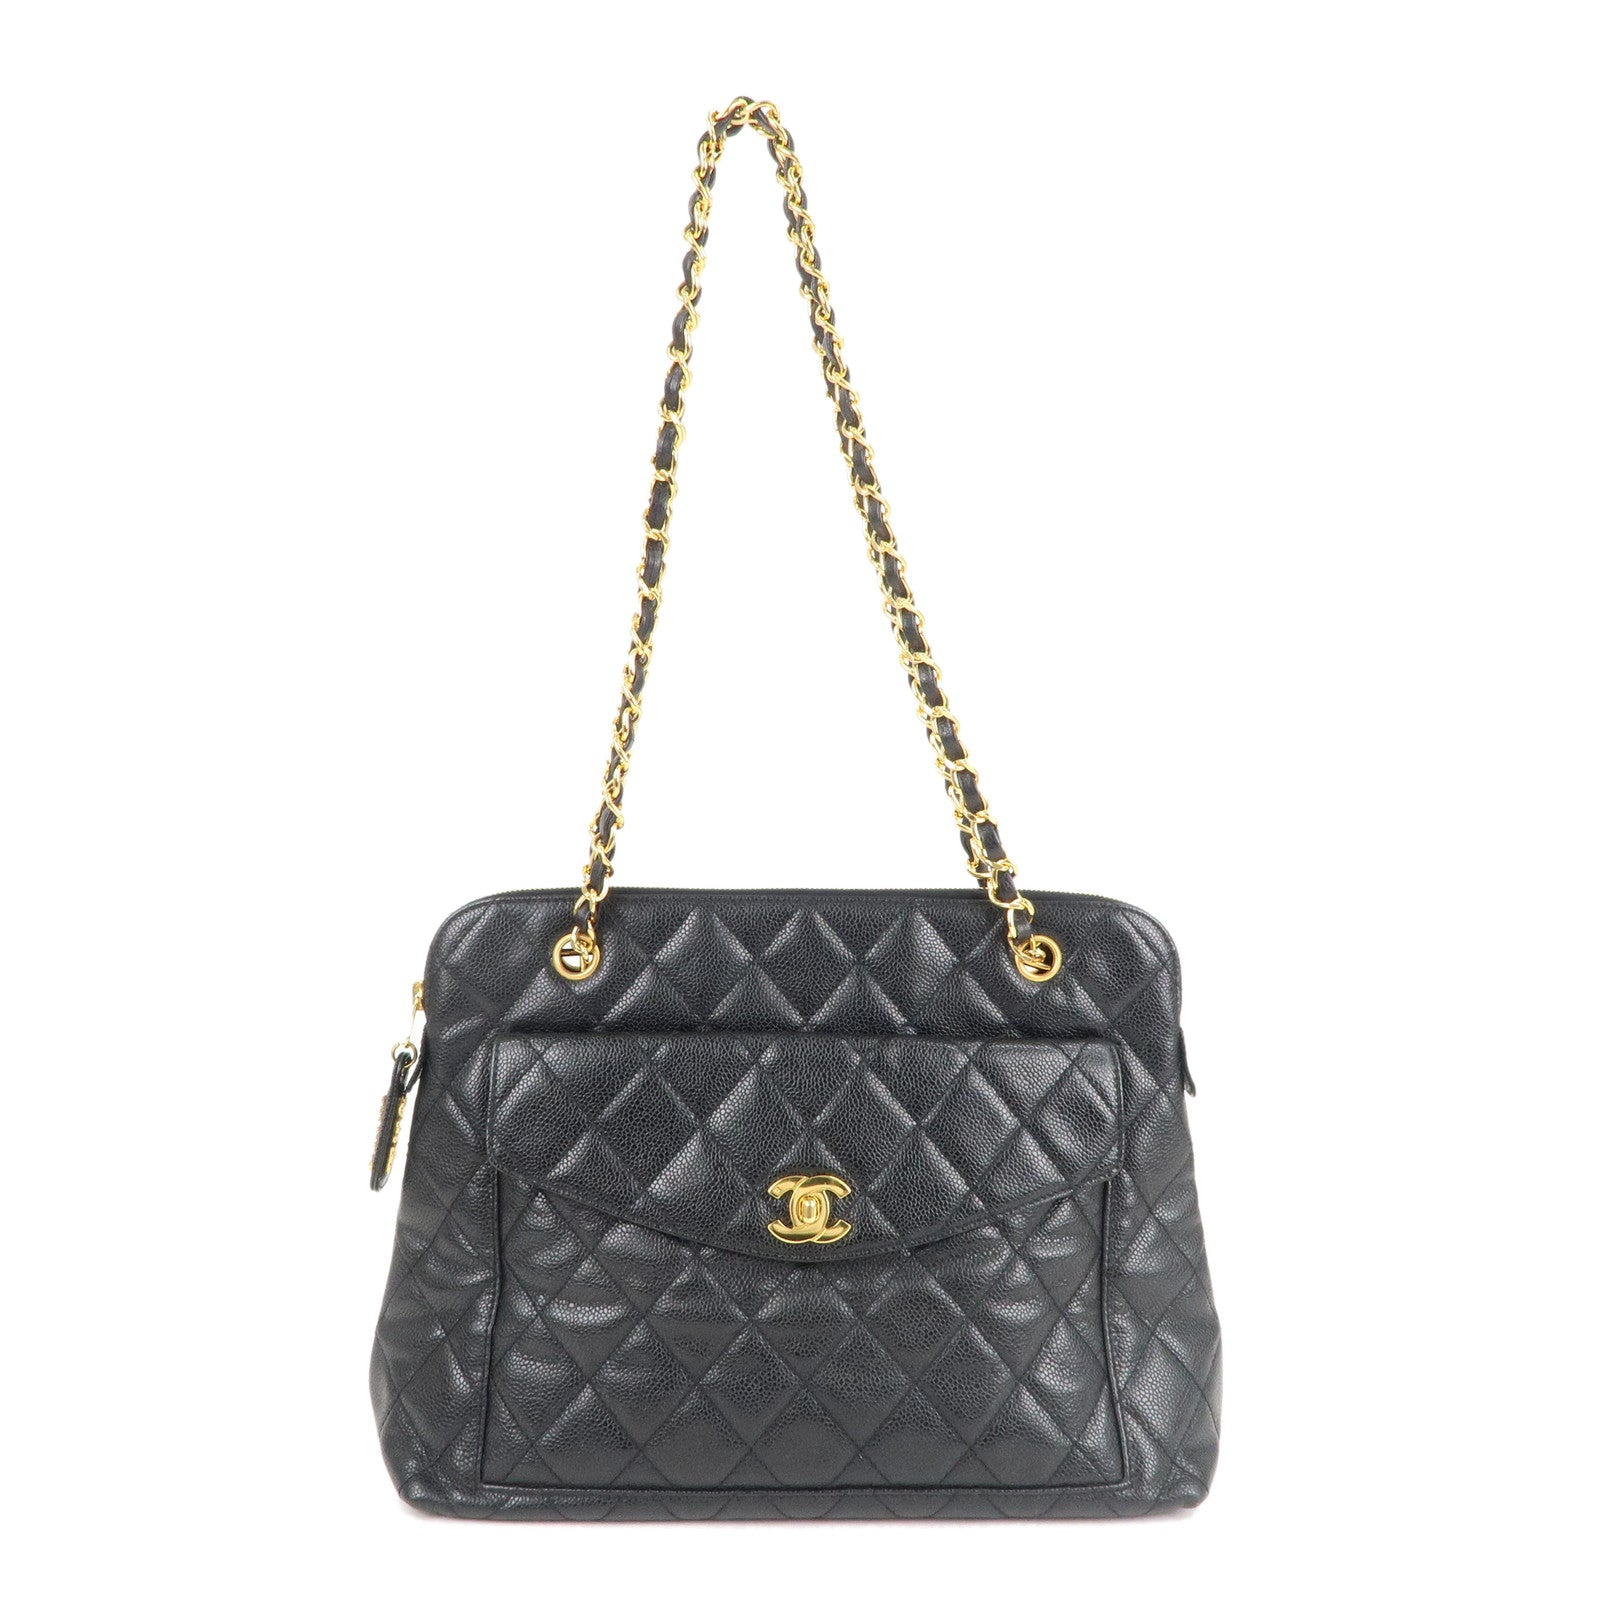 Chanel Vintage Black Quilted Caviar Leather Shoulder Bag with